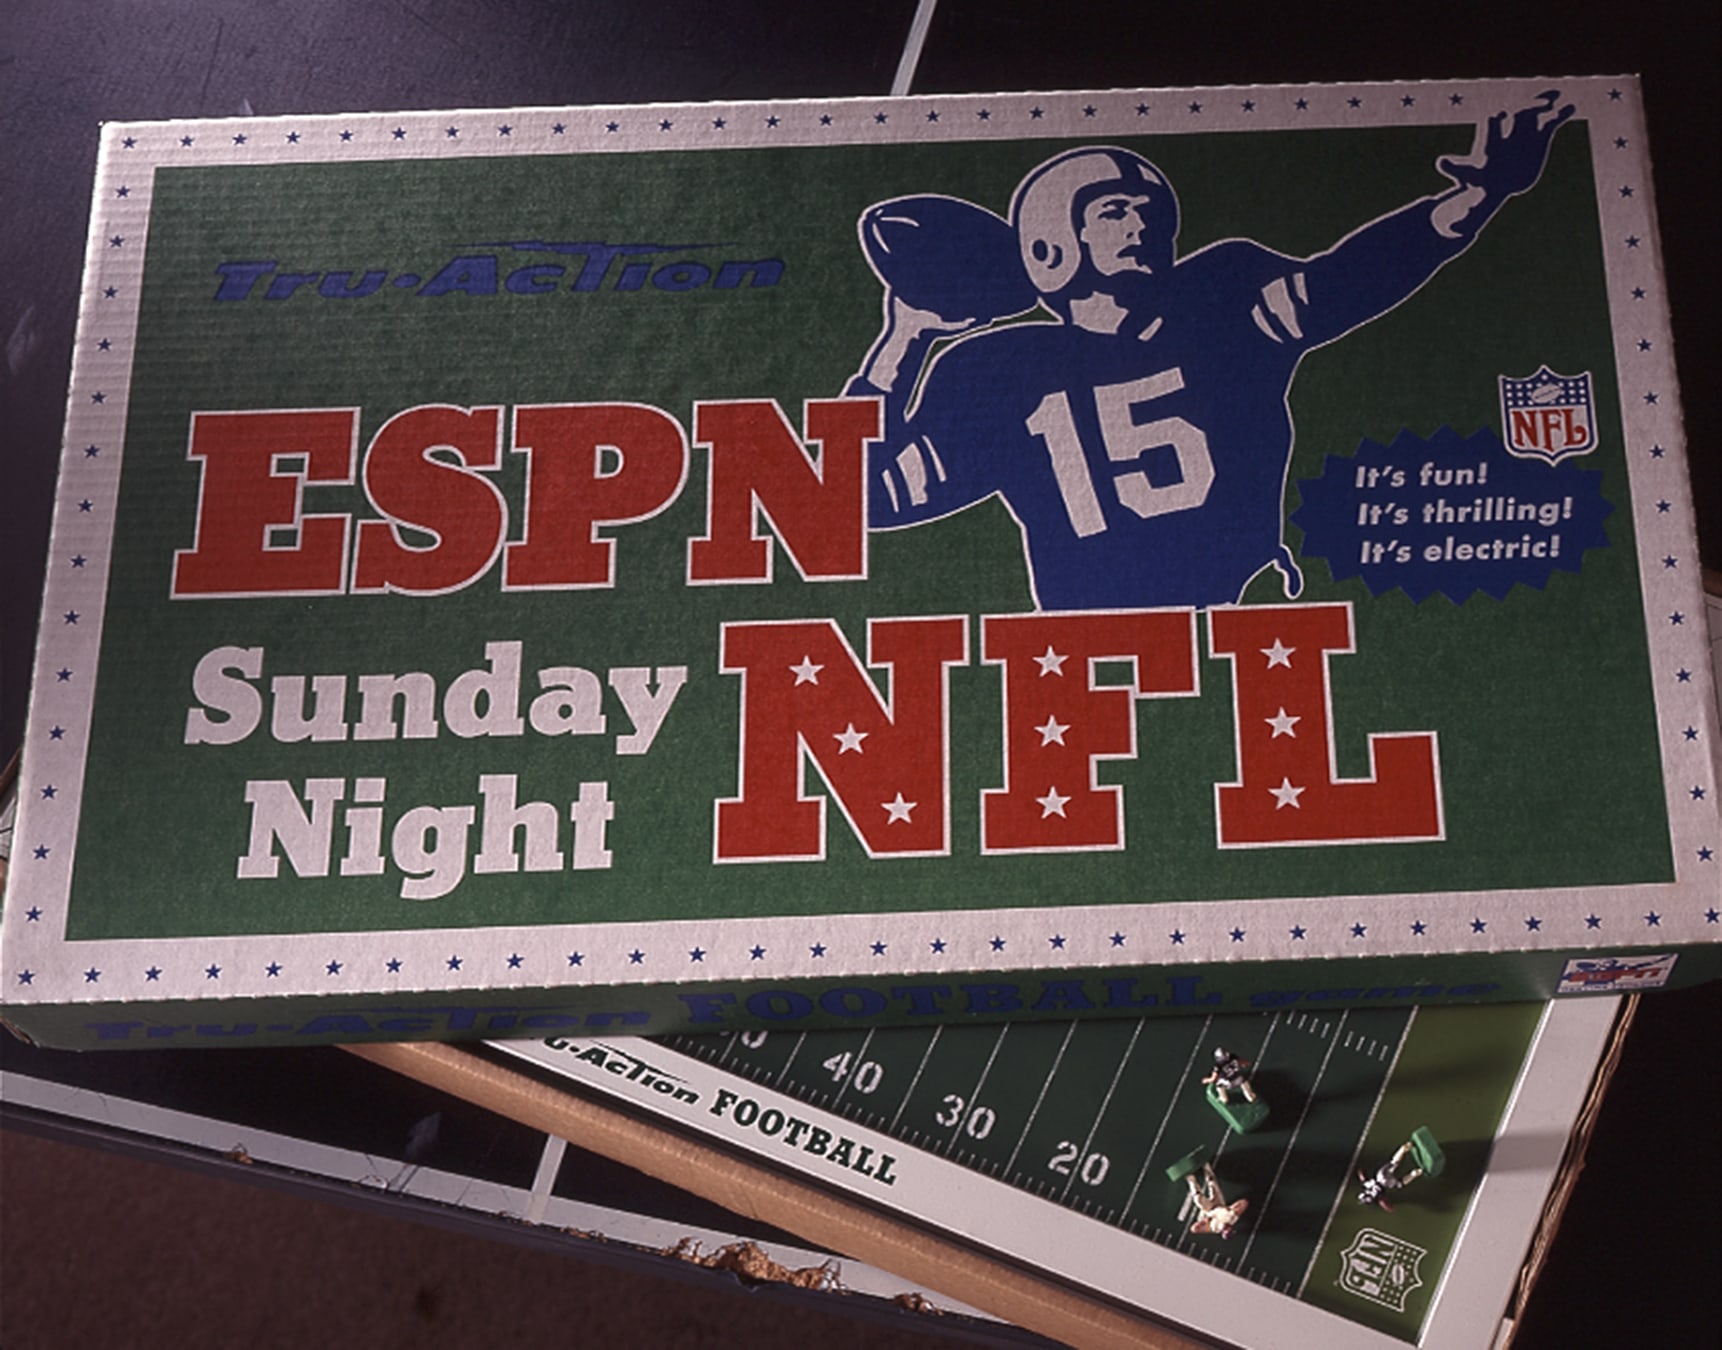 ESPN Sunday night Football game box design - ad support